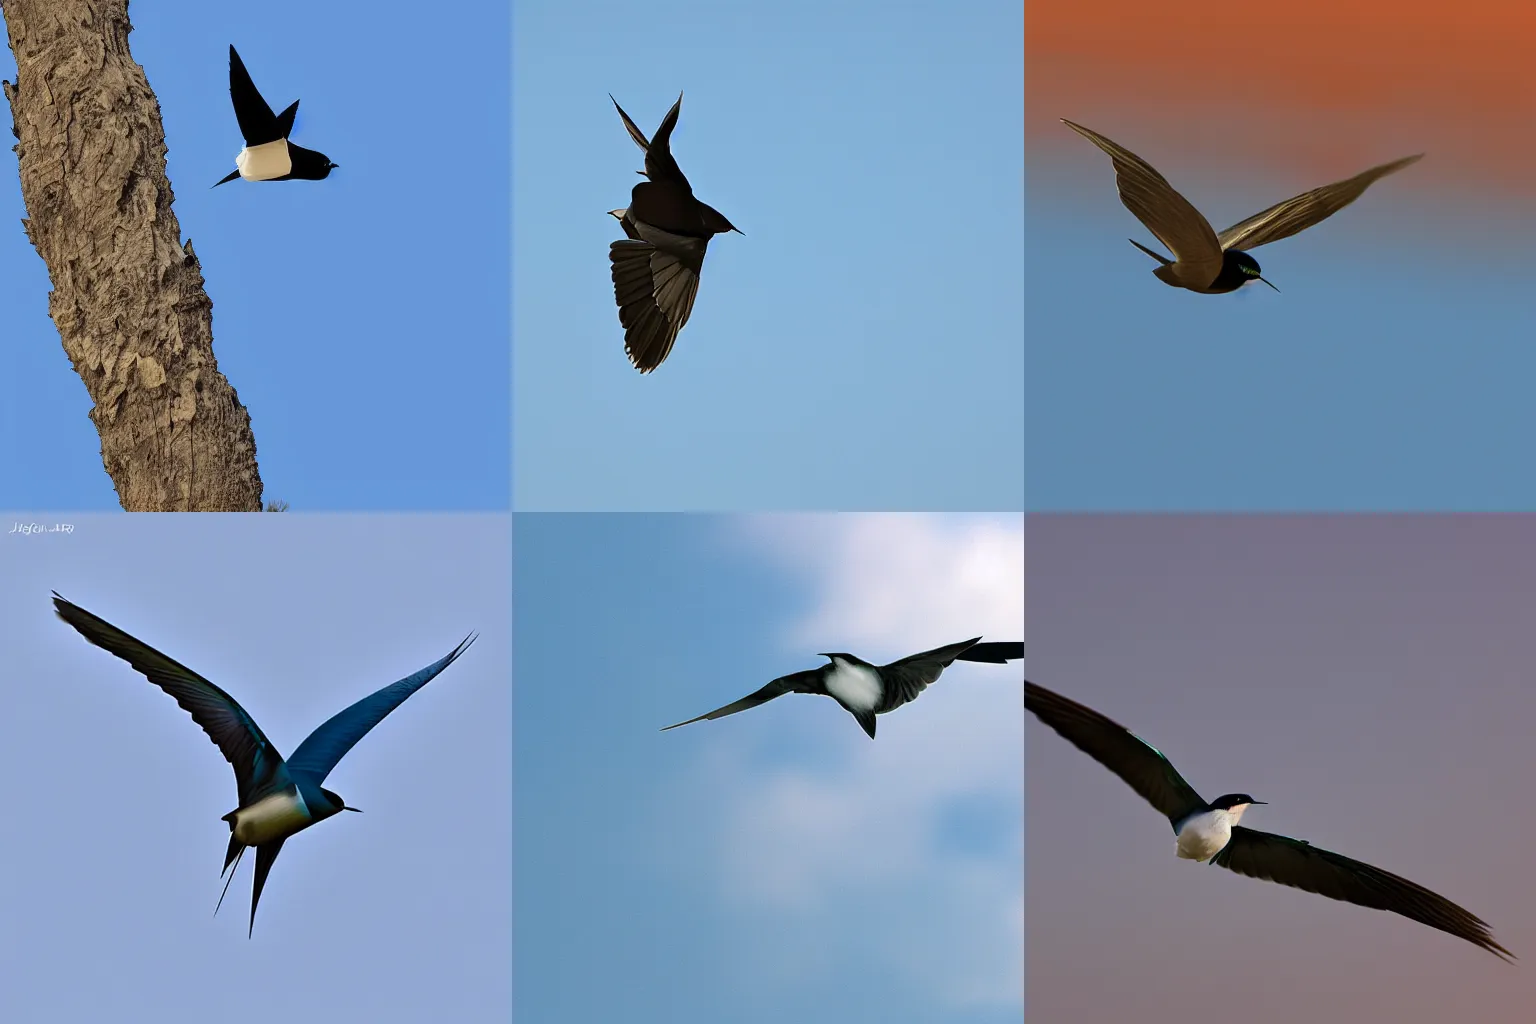 Prompt: low-poly tree swallow in flight, award-winning digital art, calming dark blue sky